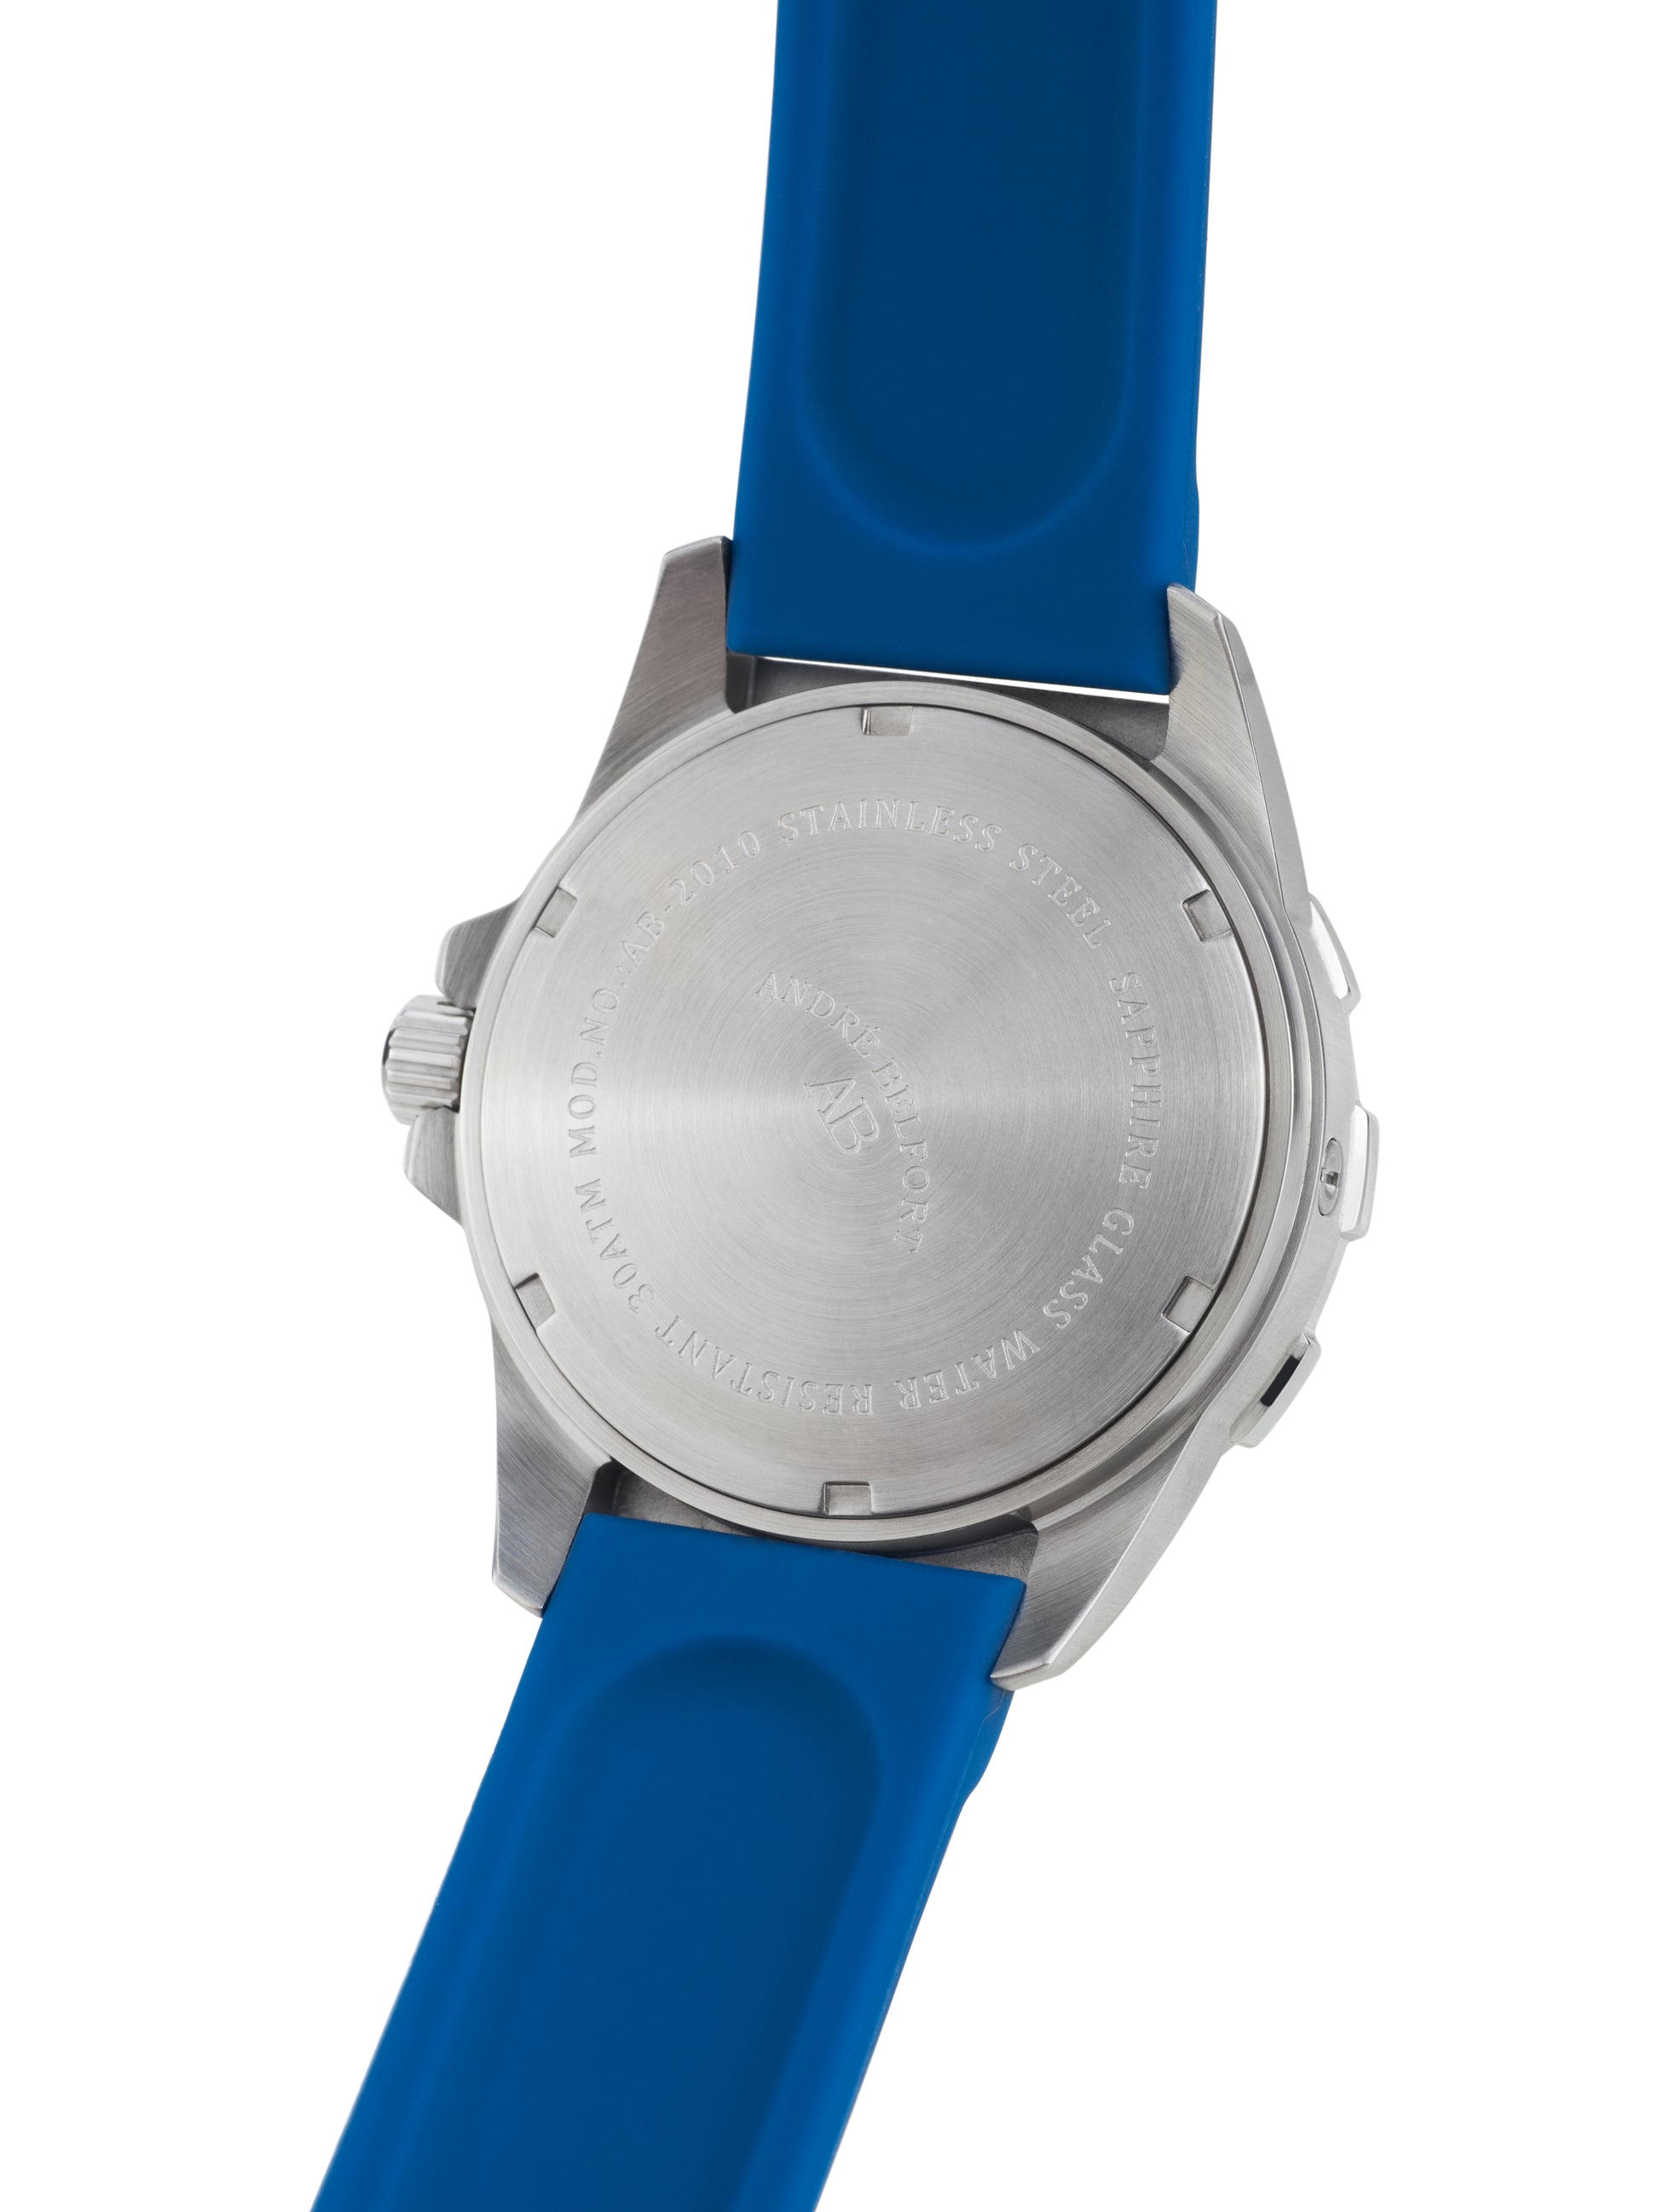 Automatic watches — Sous les mers — André Belfort — blue